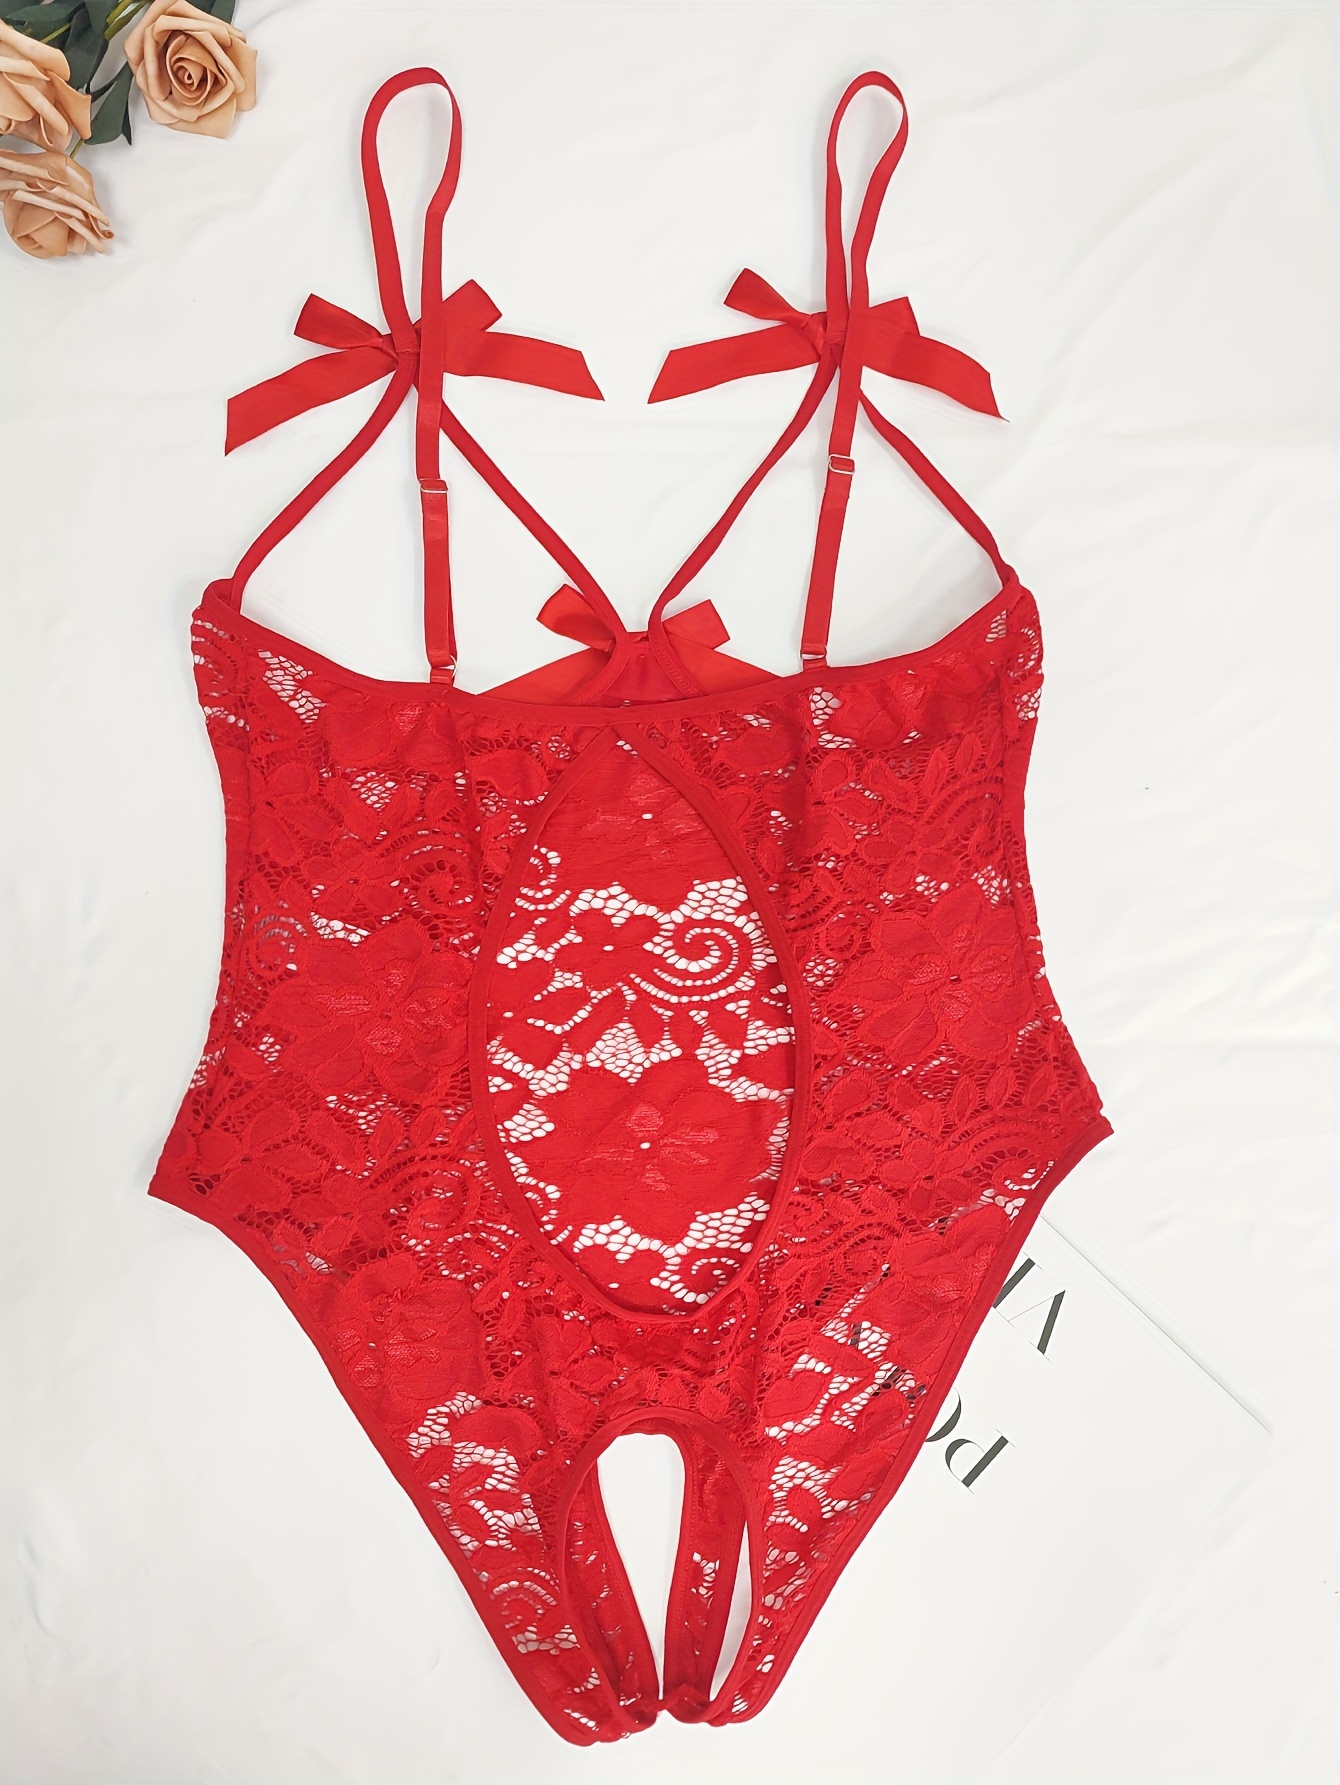 Women's One-piece Cupless Crotchless Lingerie Bodysuit Lace Underwear Set  M-xxl Size Red